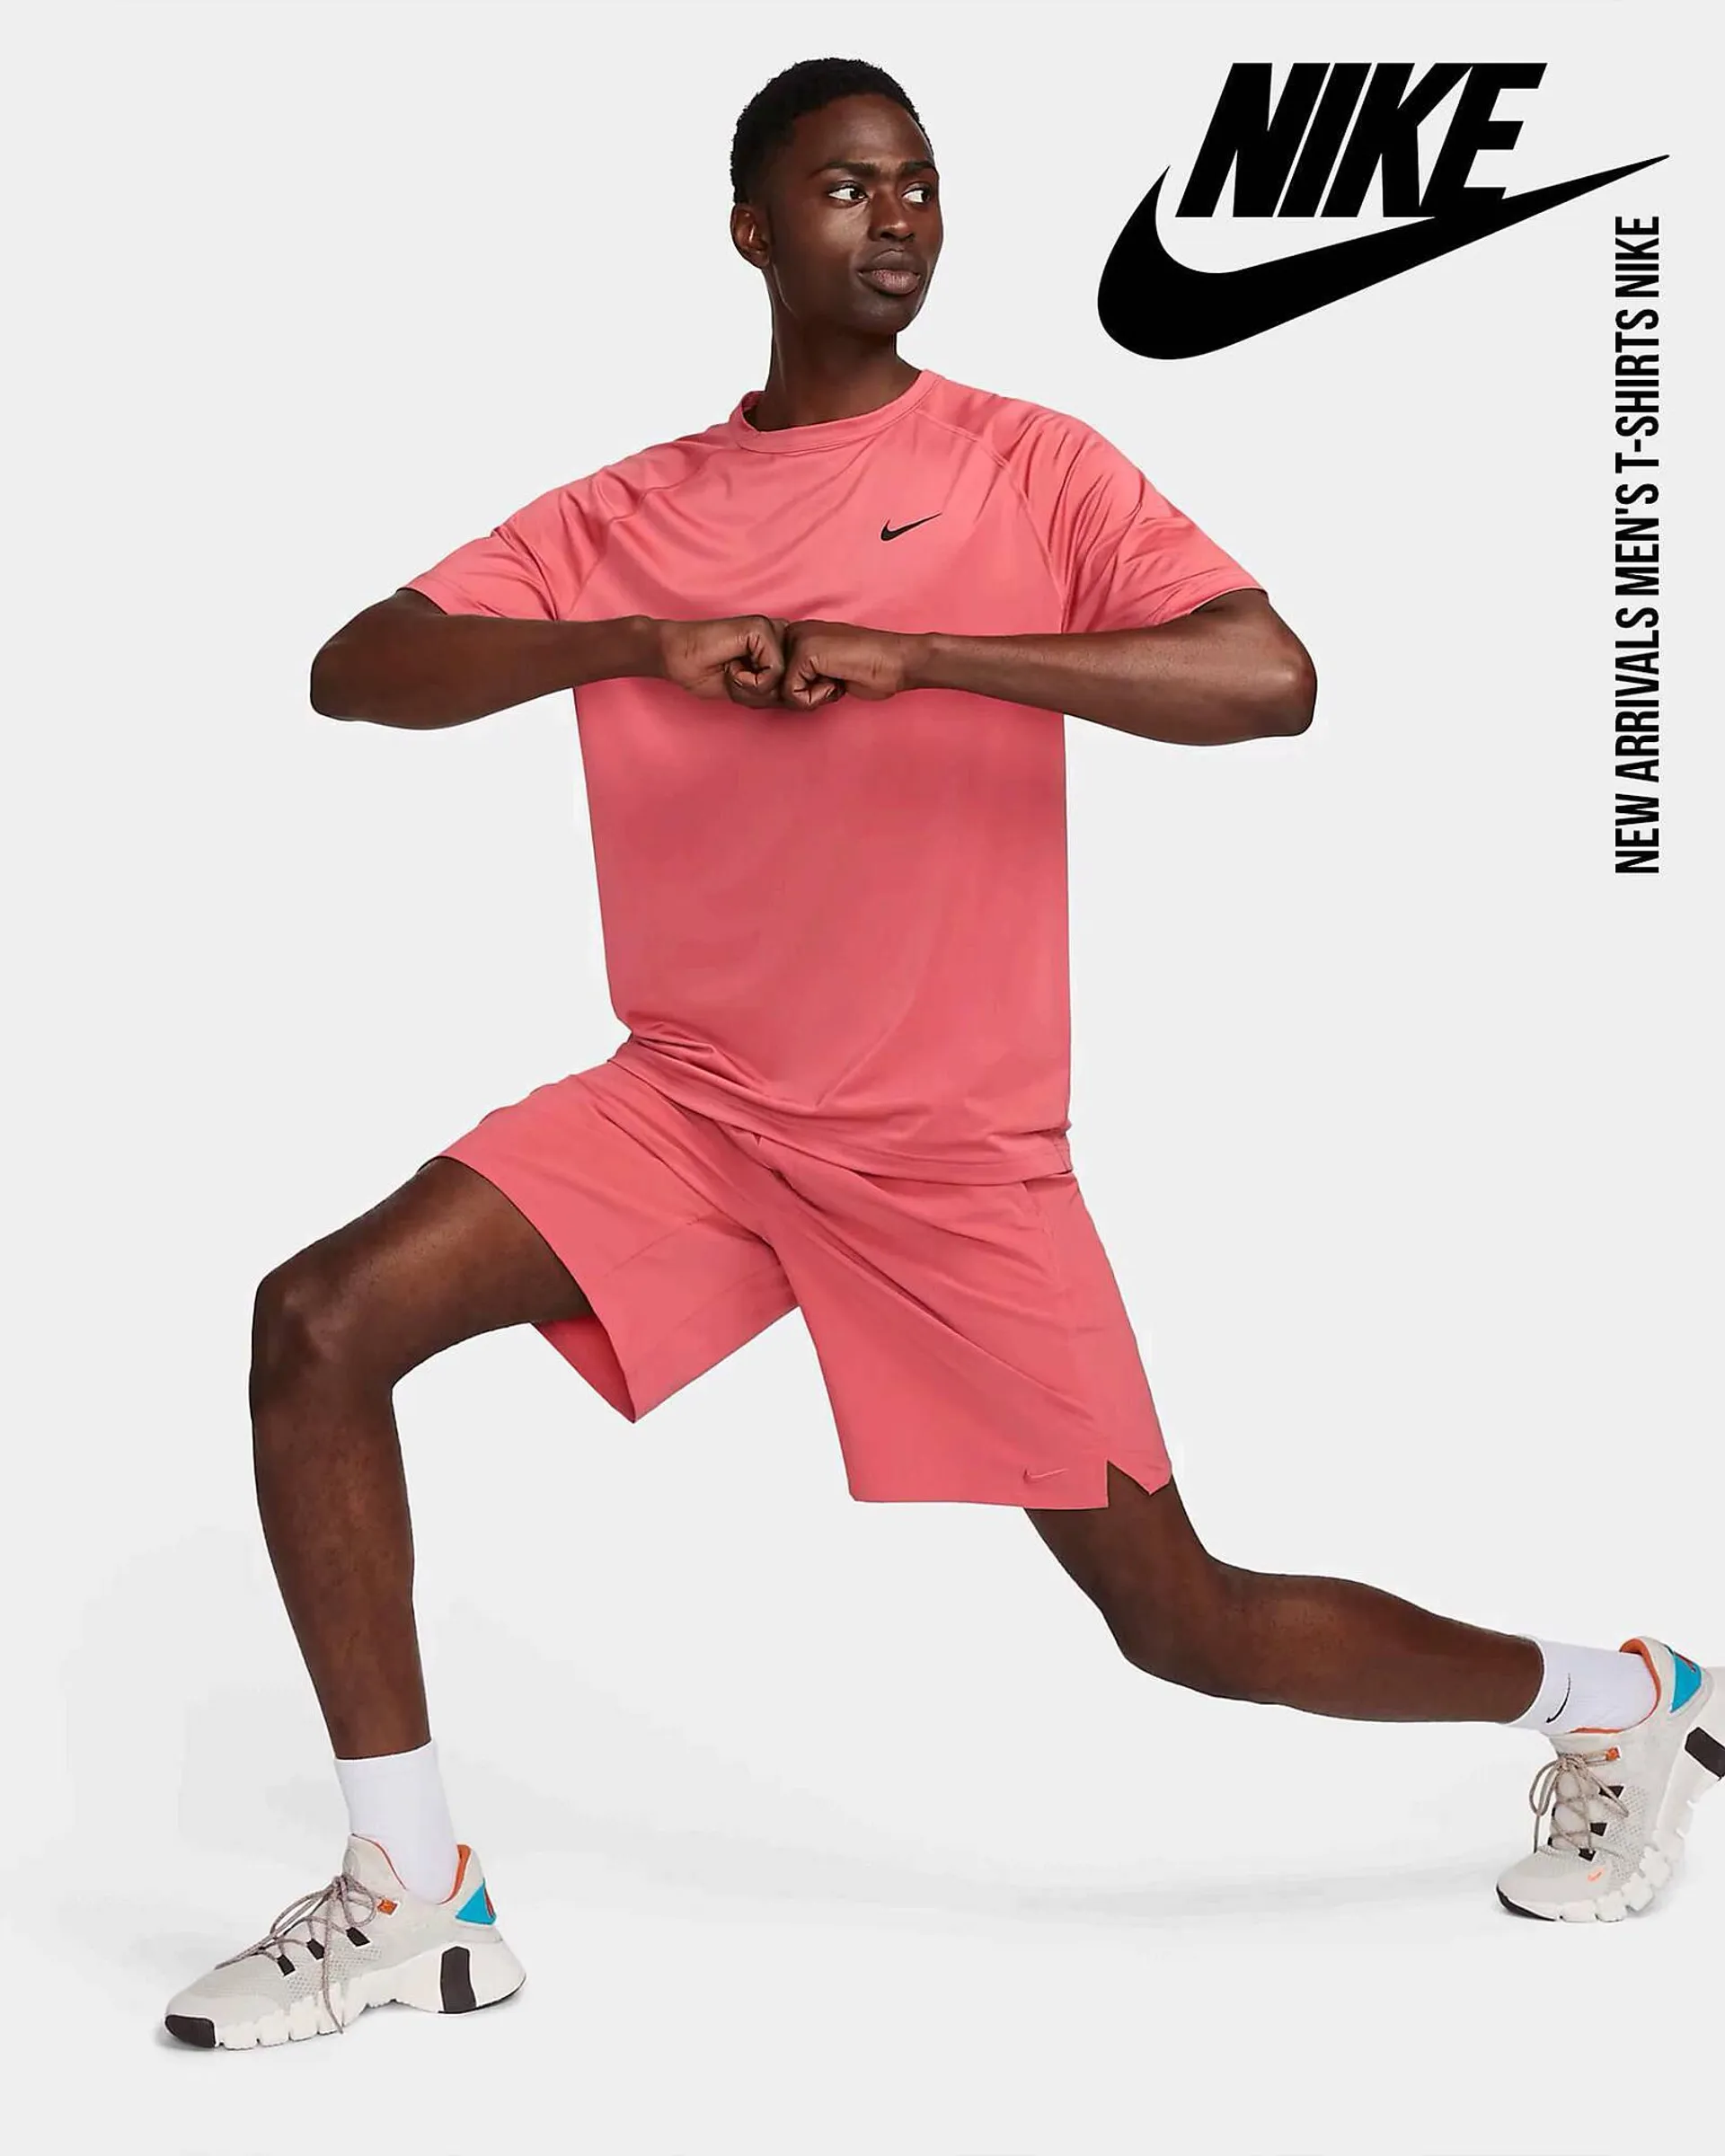 Nike flyer - 1